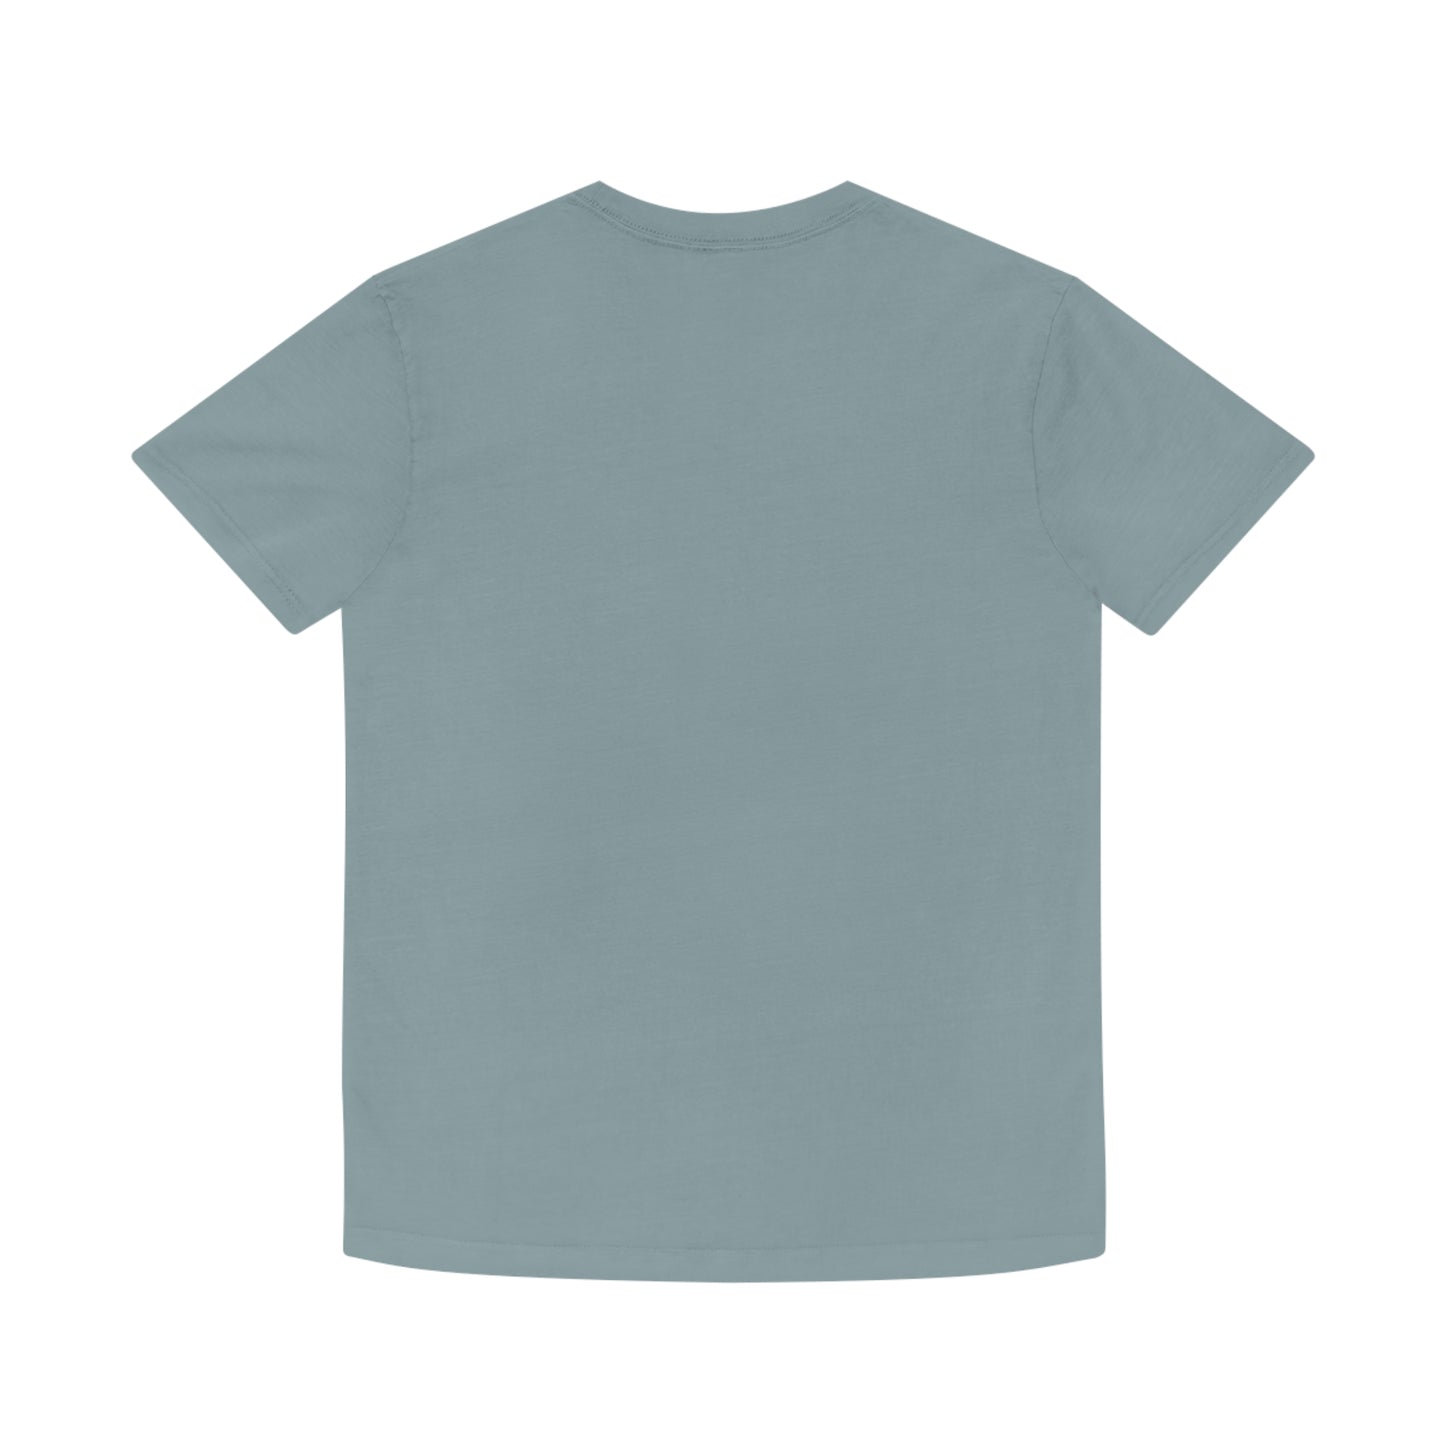 Cotton T-Shirt Northern Beaches Newport logo